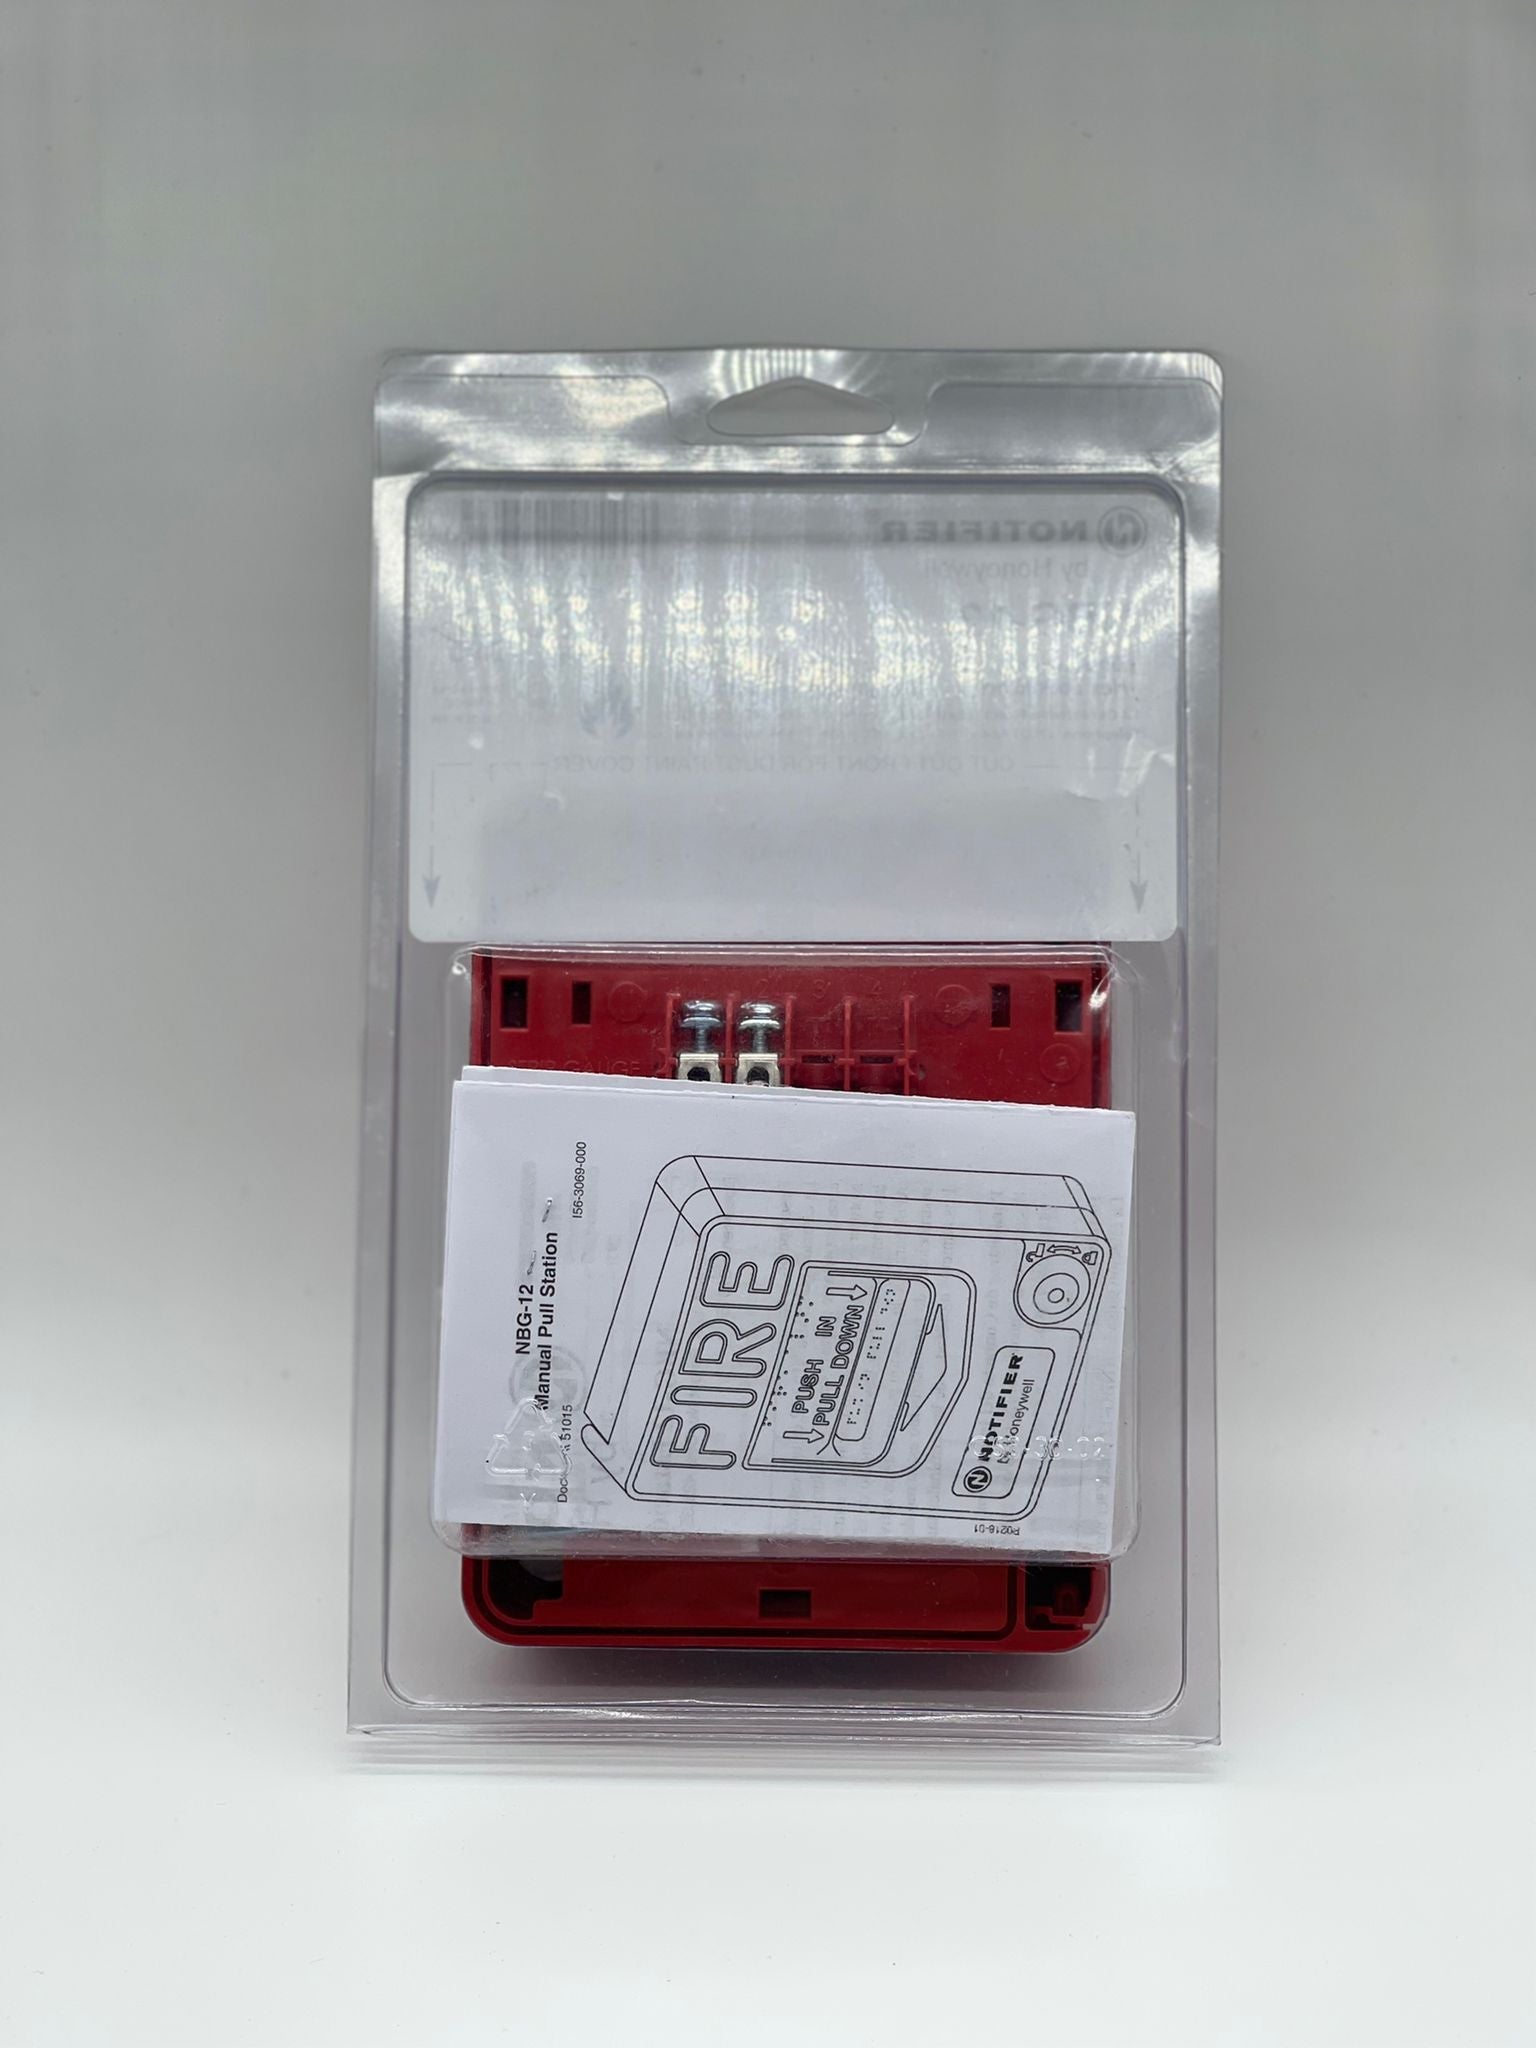 Notifier NBG-12 - The Fire Alarm Supplier